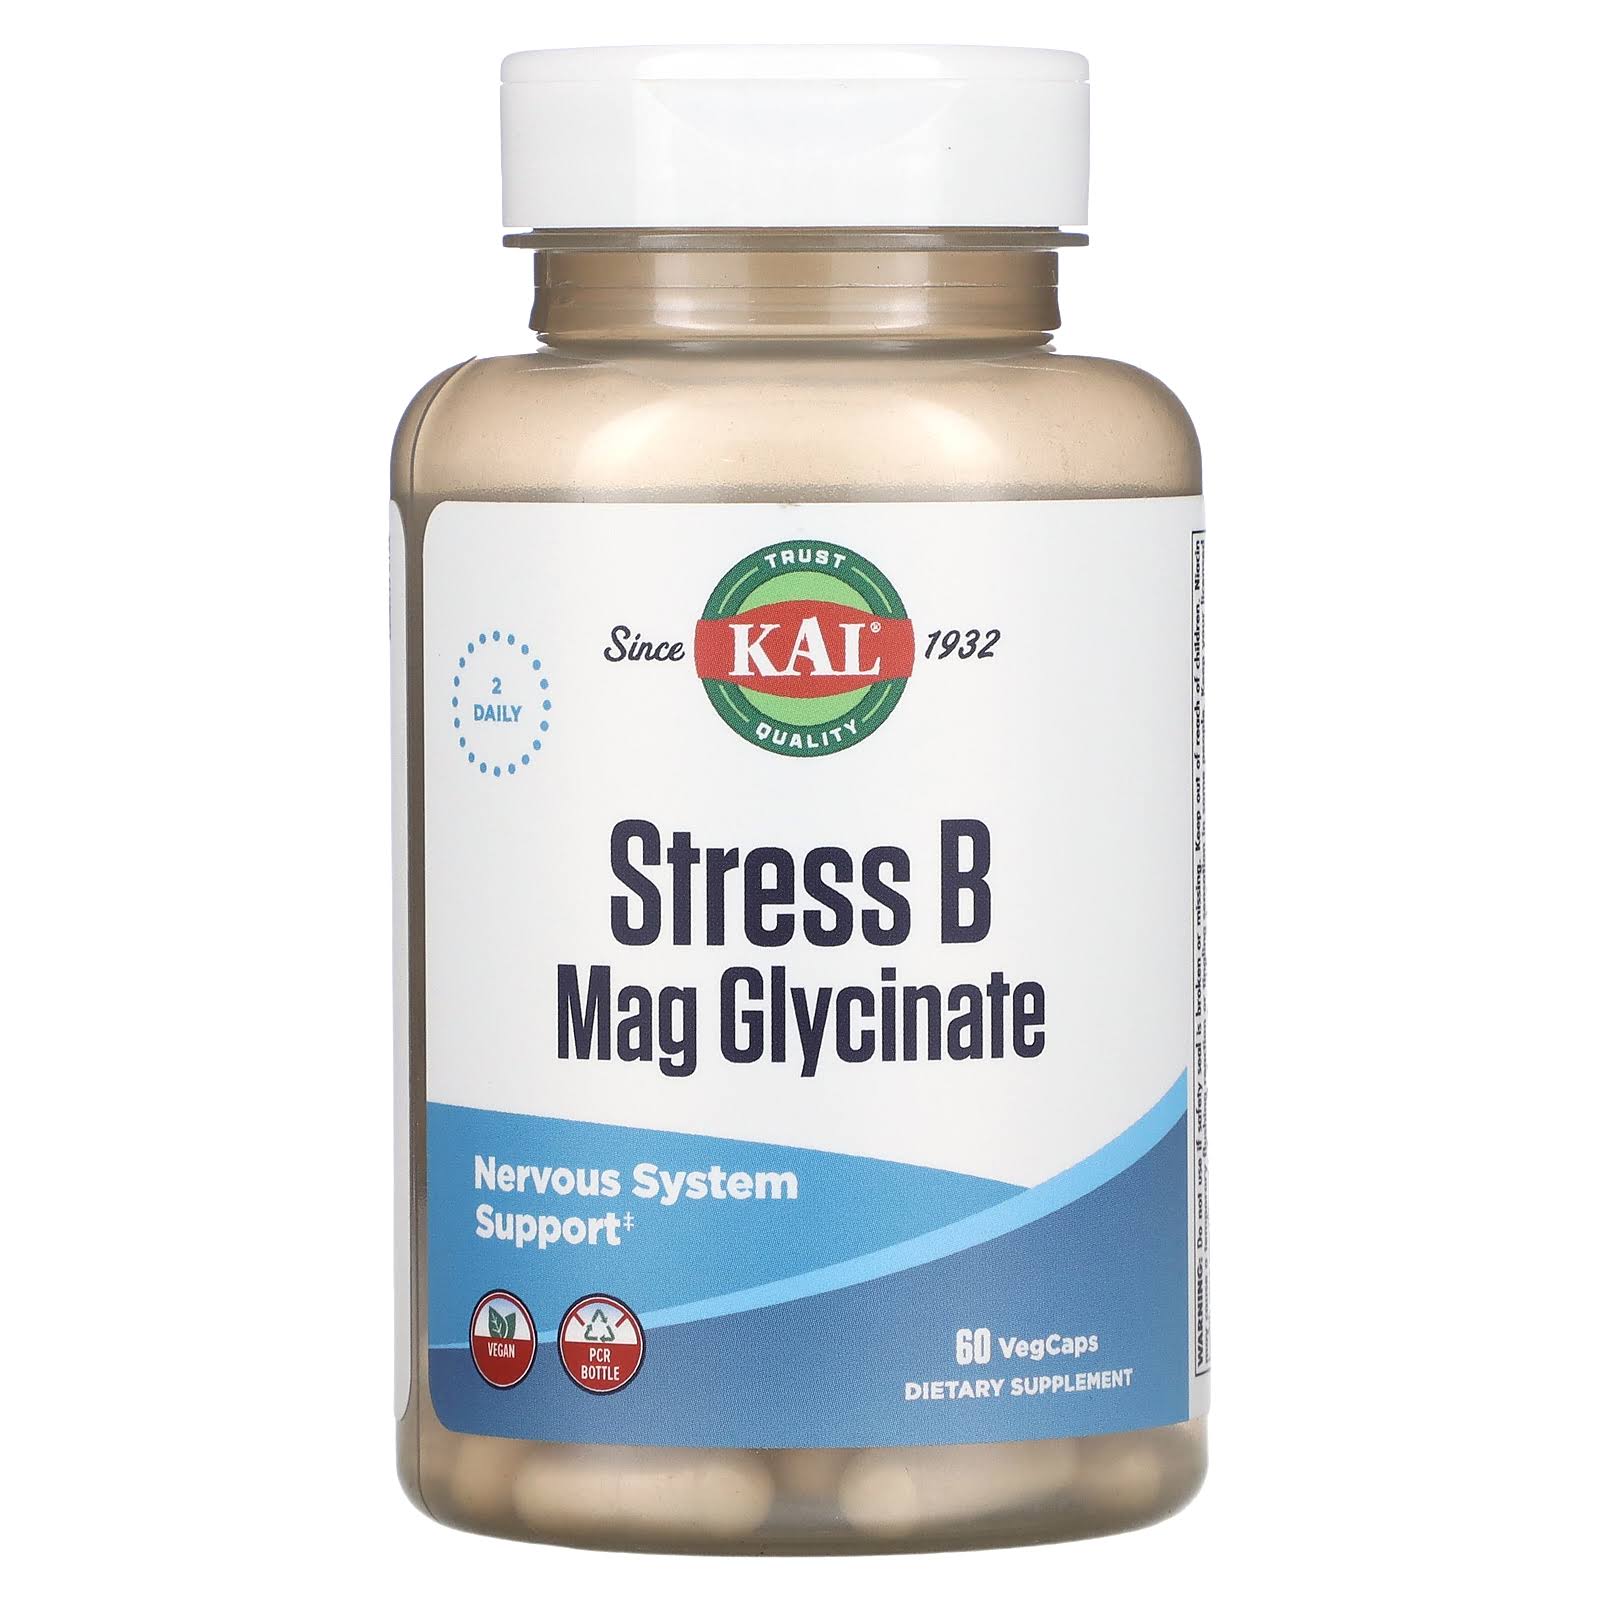 Kal Stress B Mag Glycinate - 60 vcaps